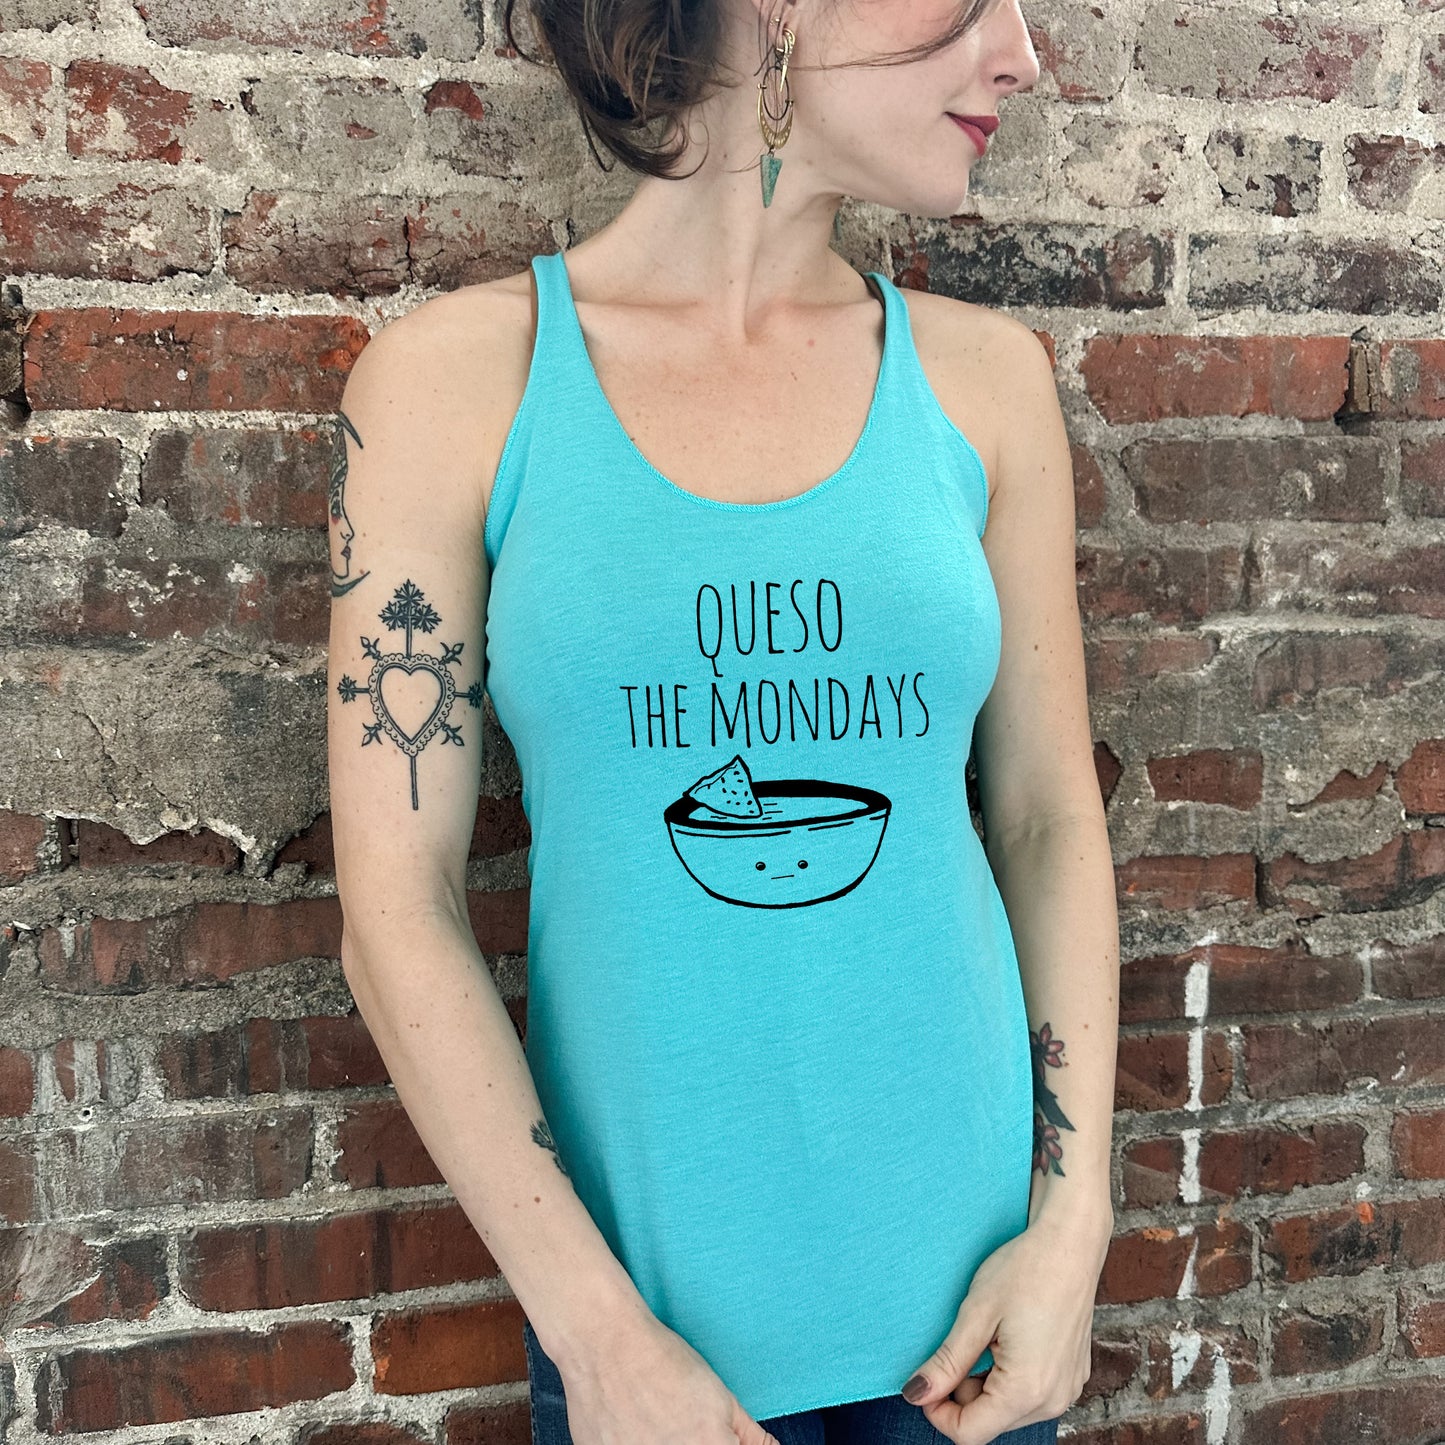 Queso The Mondays (Tacos) - Women's Tank - Heather Gray, Tahiti, or Envy